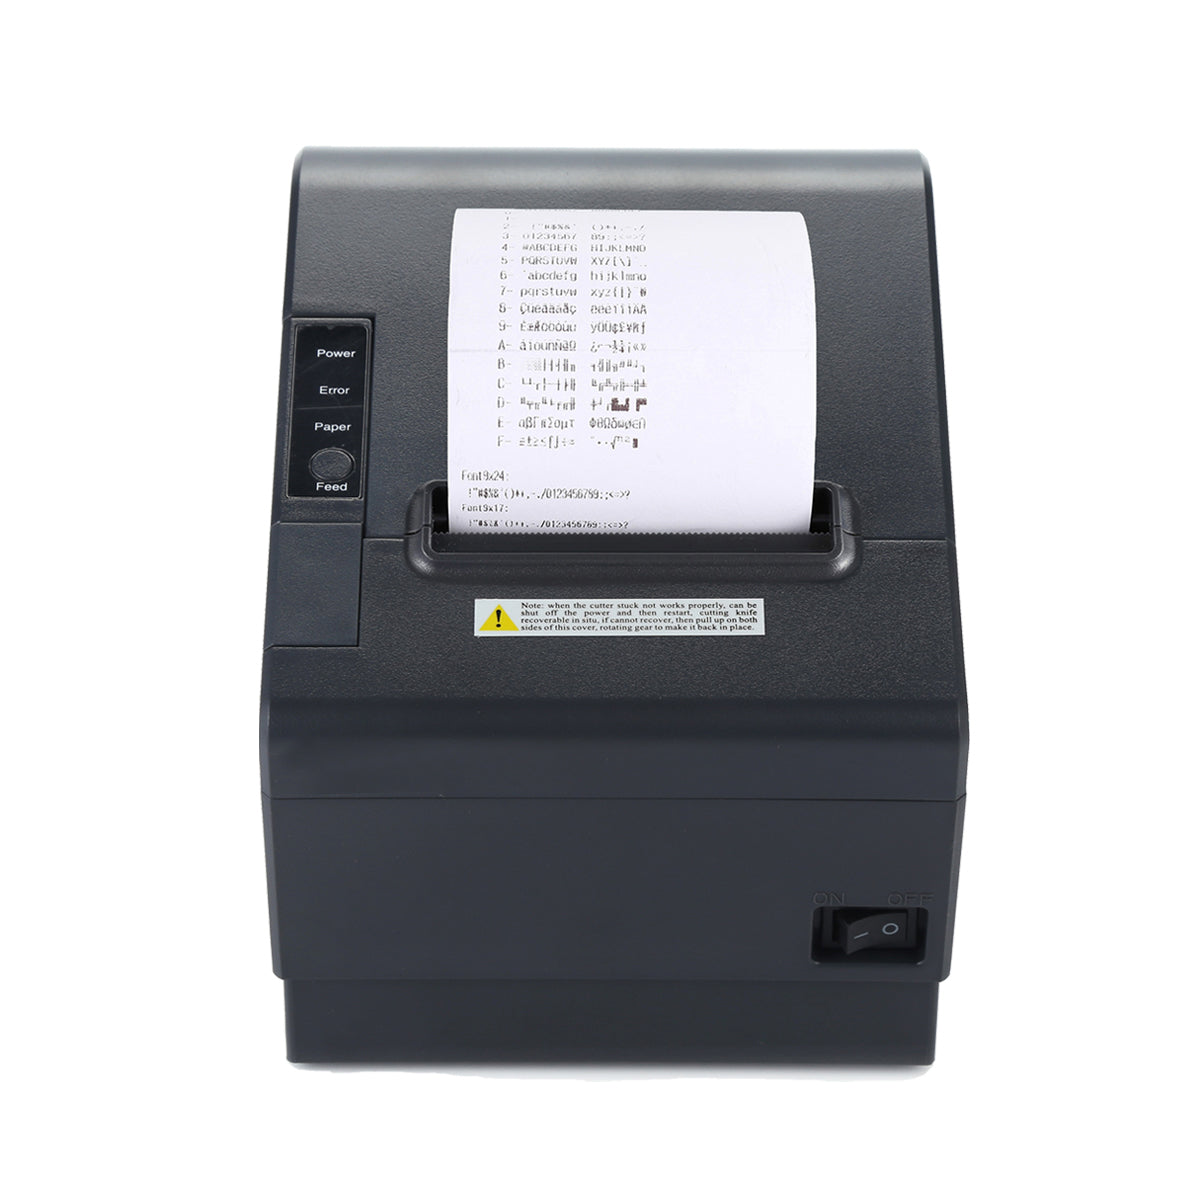 Buvvas HS-802 Thermal Receipt Printer